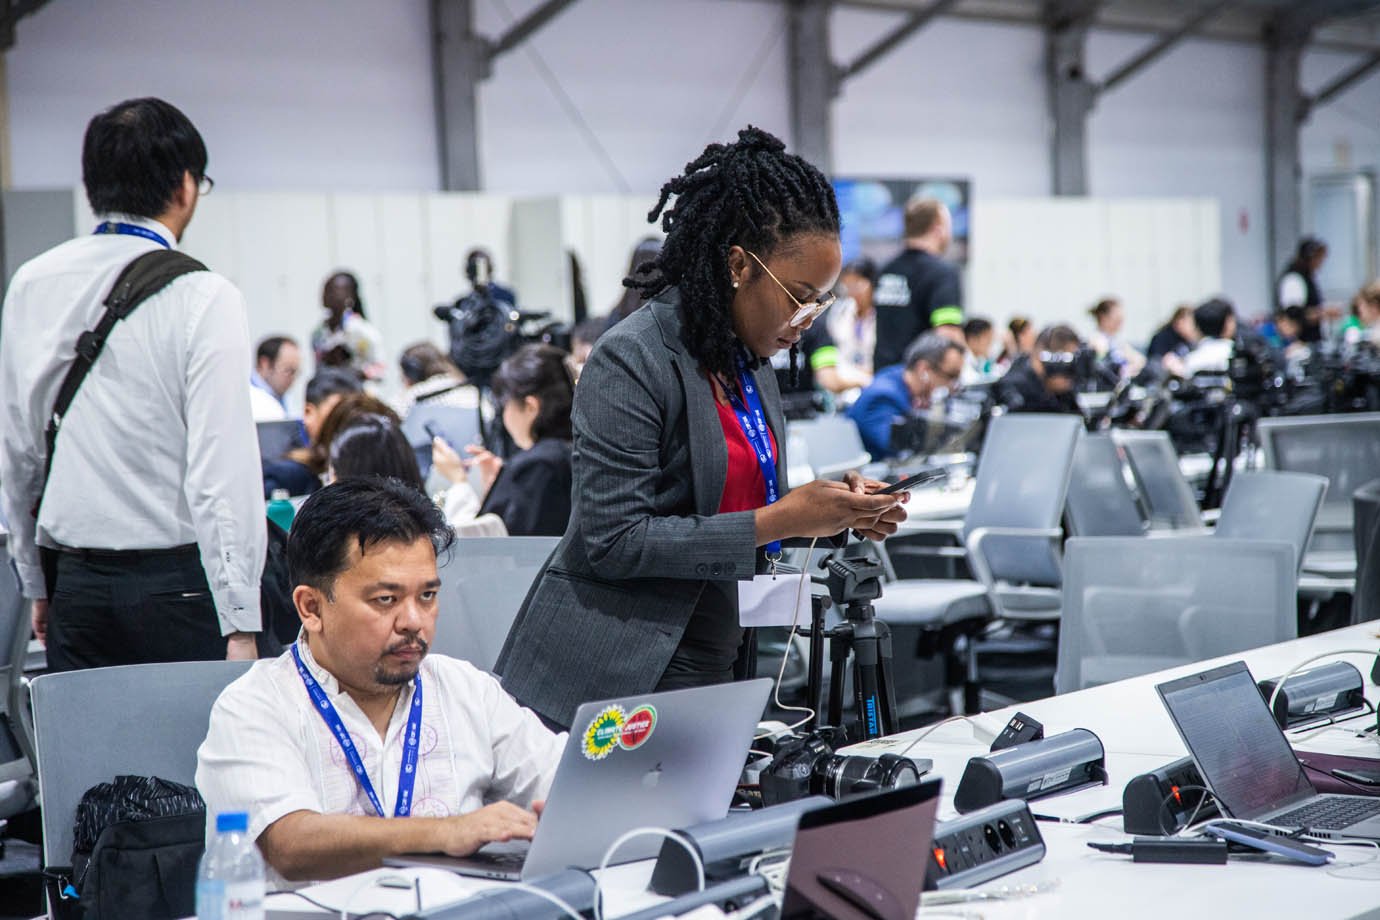 Jornalistas na sala de imprensa da COP28 - Dubai 

Foto: Leandro Fonseca - @leofonsa